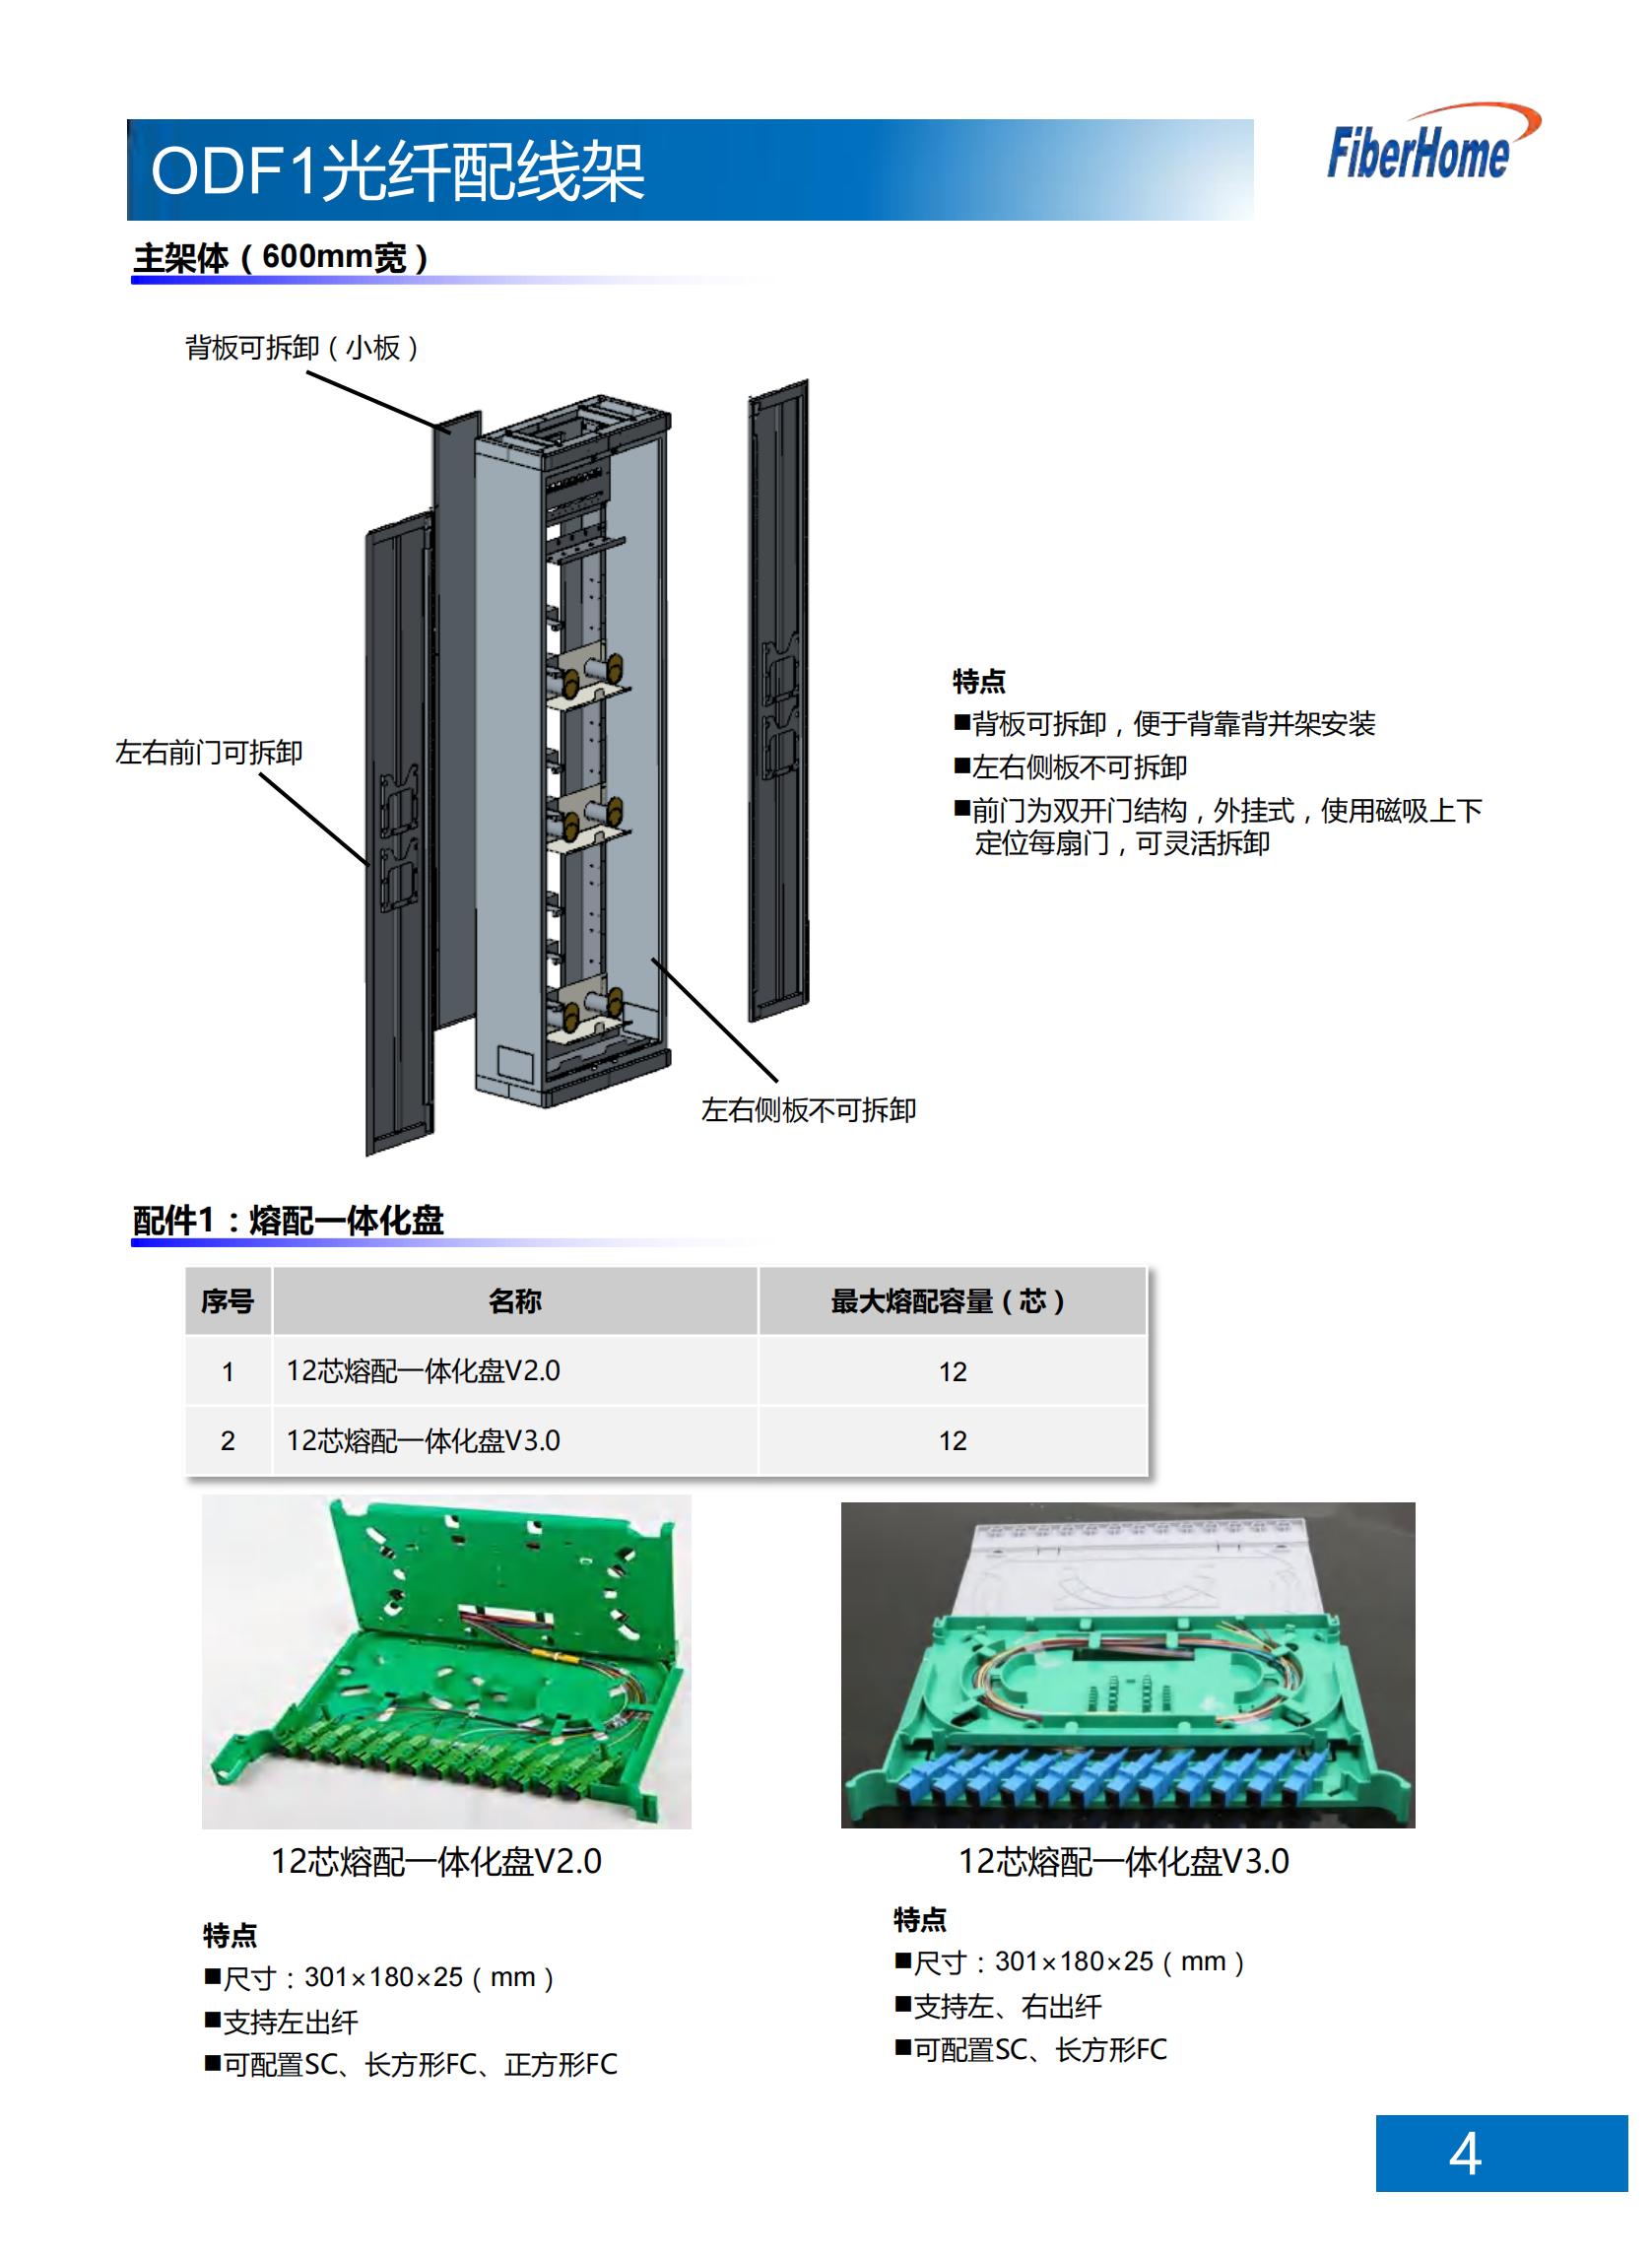 ODF101-576-A6-LC ODF光纤配线架 （288芯落地式 全部含24芯LC熔配一体化单元）